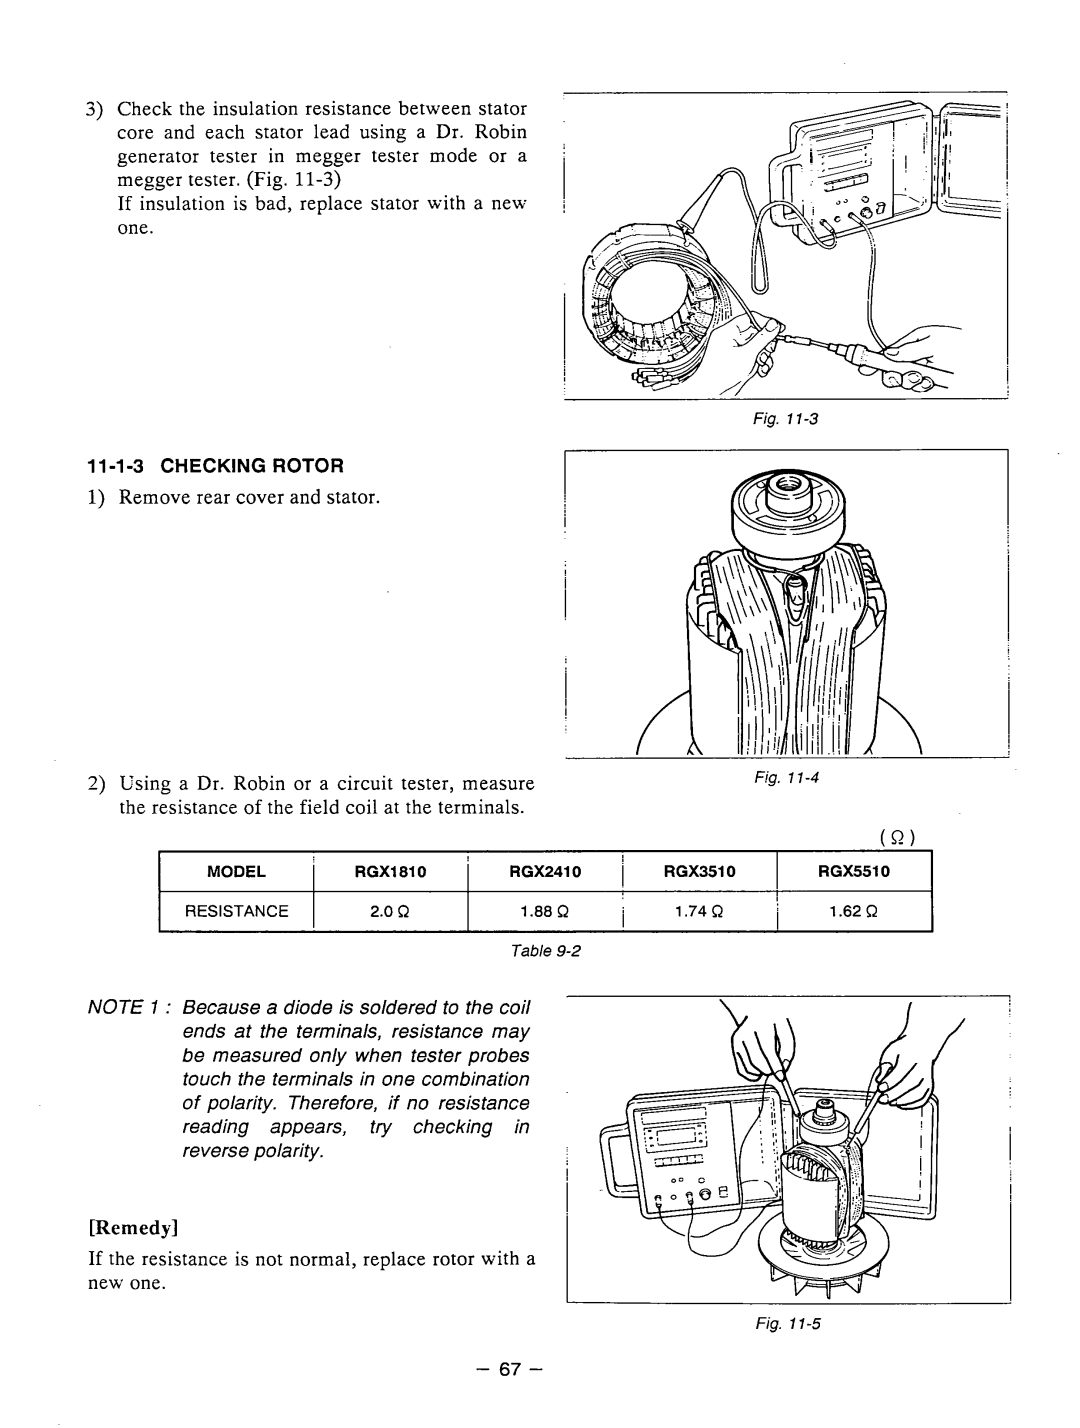 Subaru Robin Power Products RGX3510 manual Remedy 